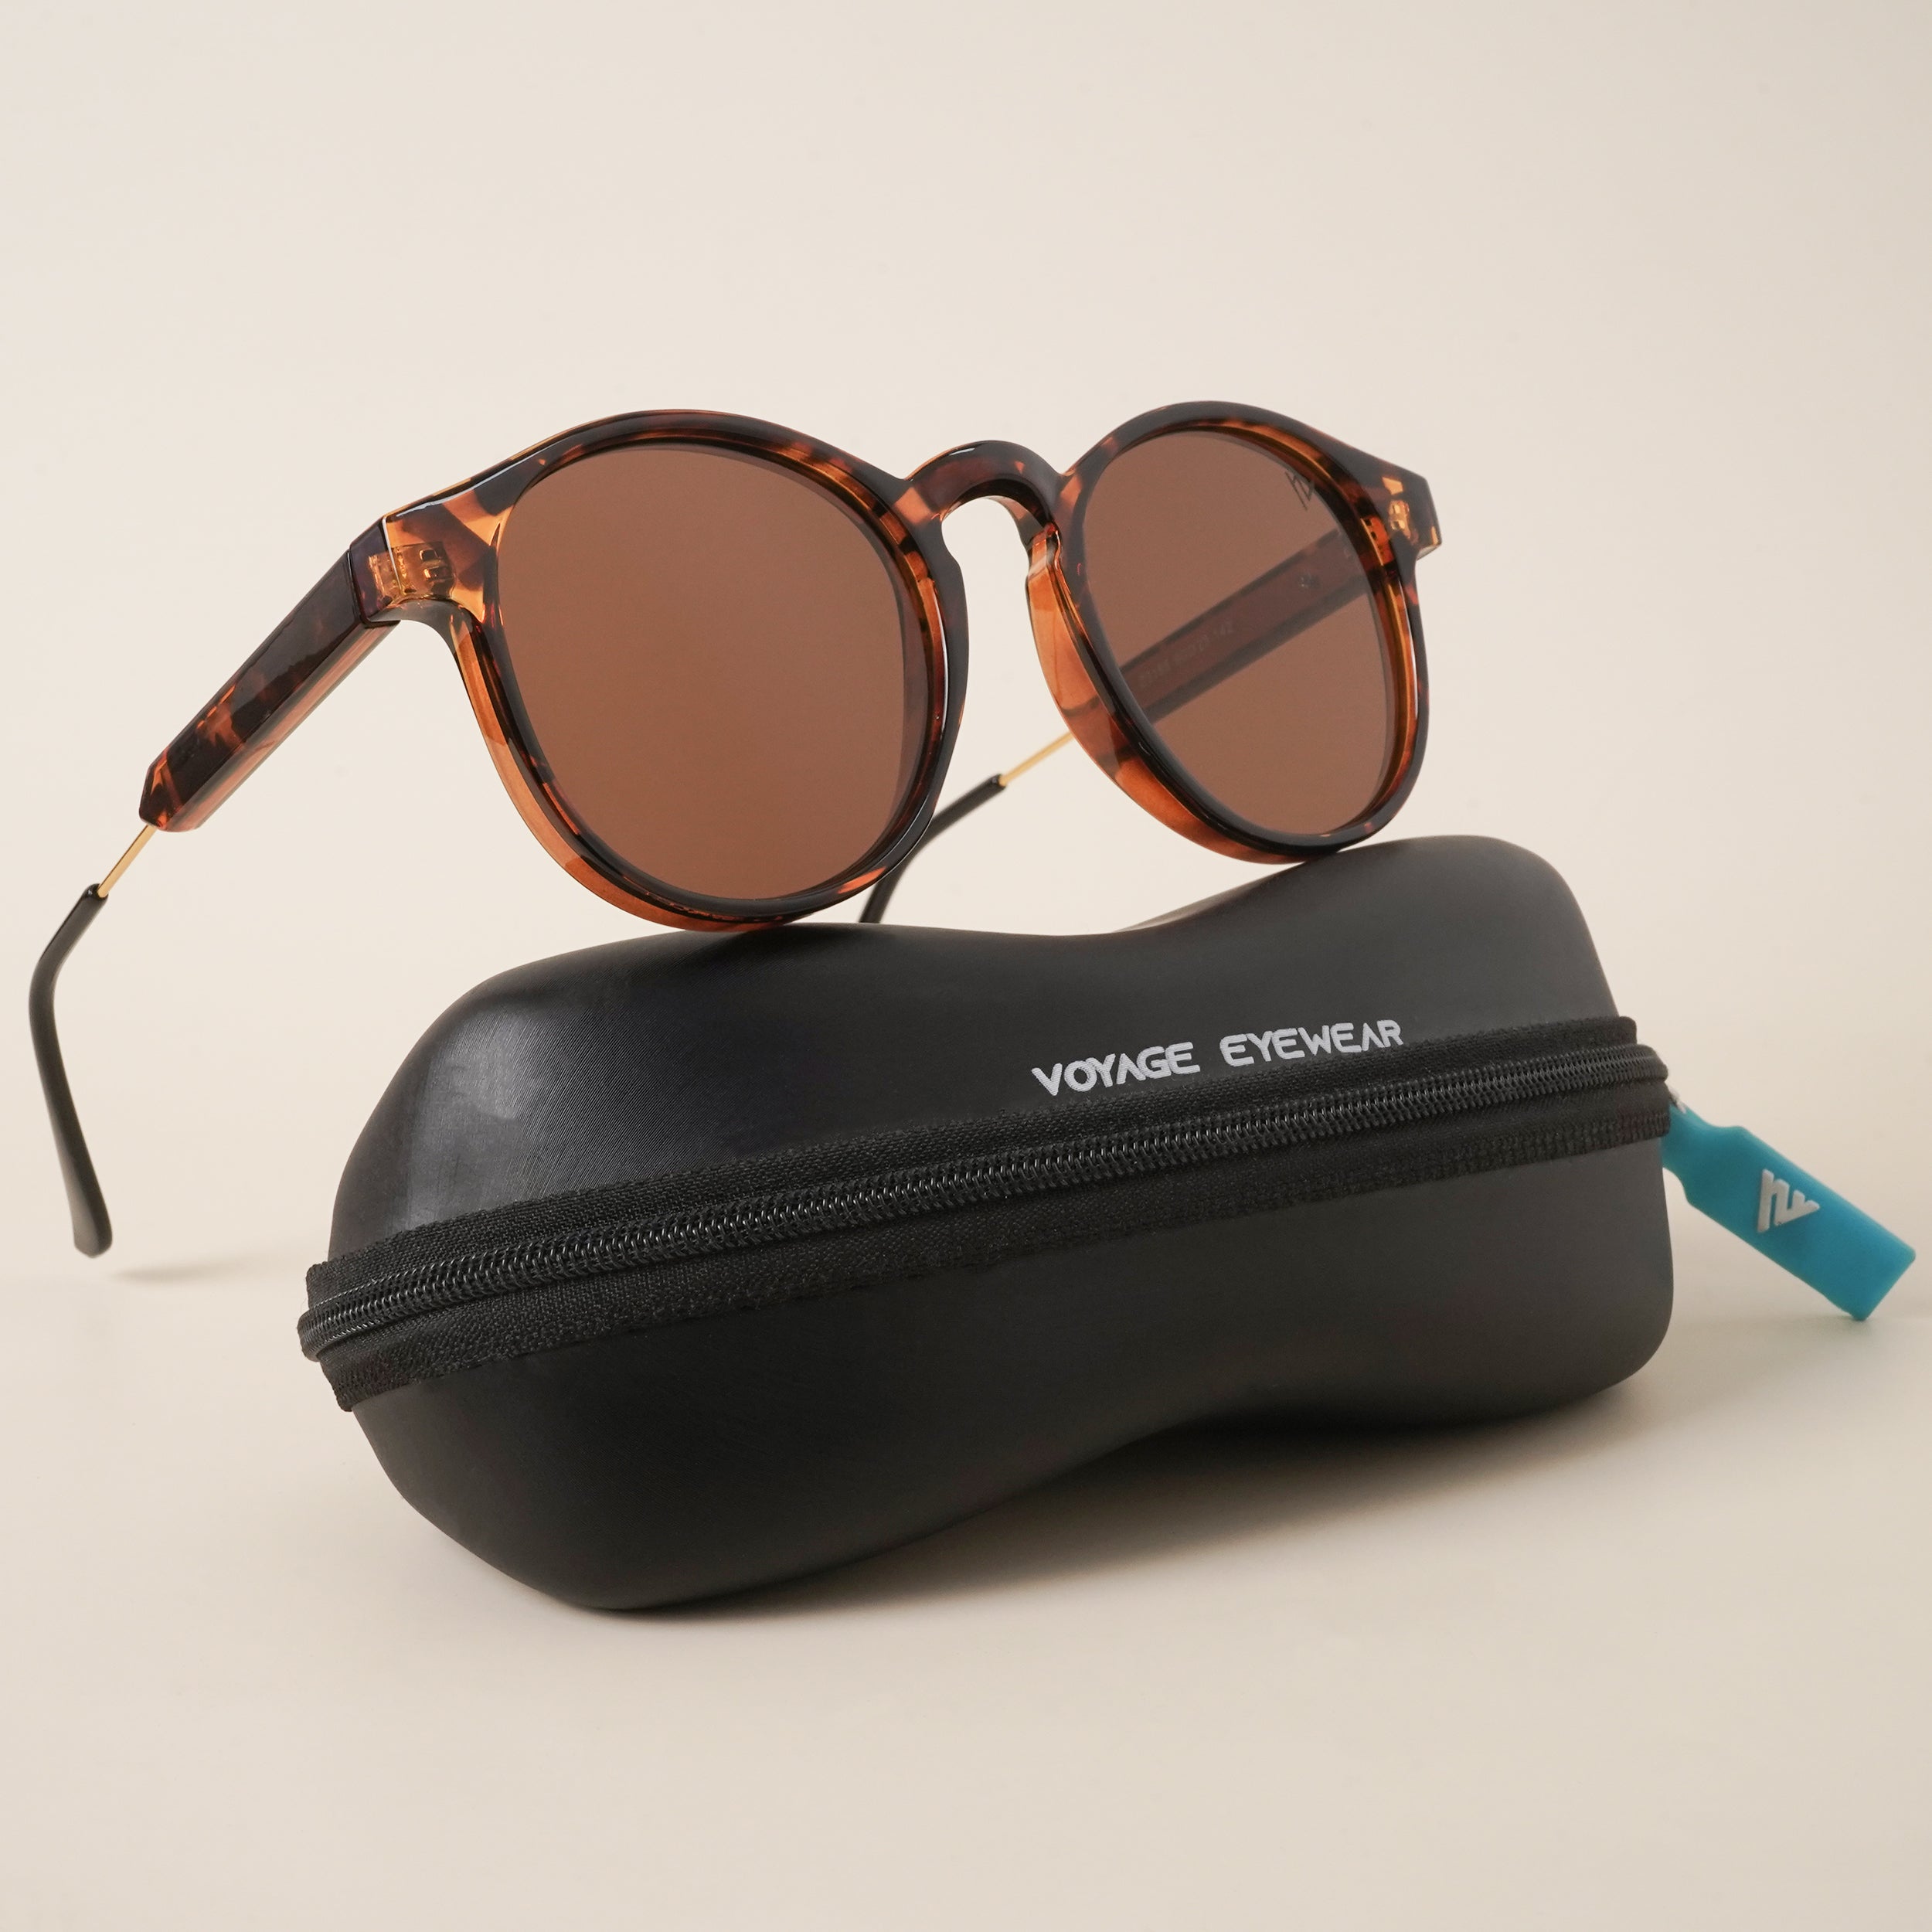 Voyage Demi Brown Round Sunglasses - MG3880